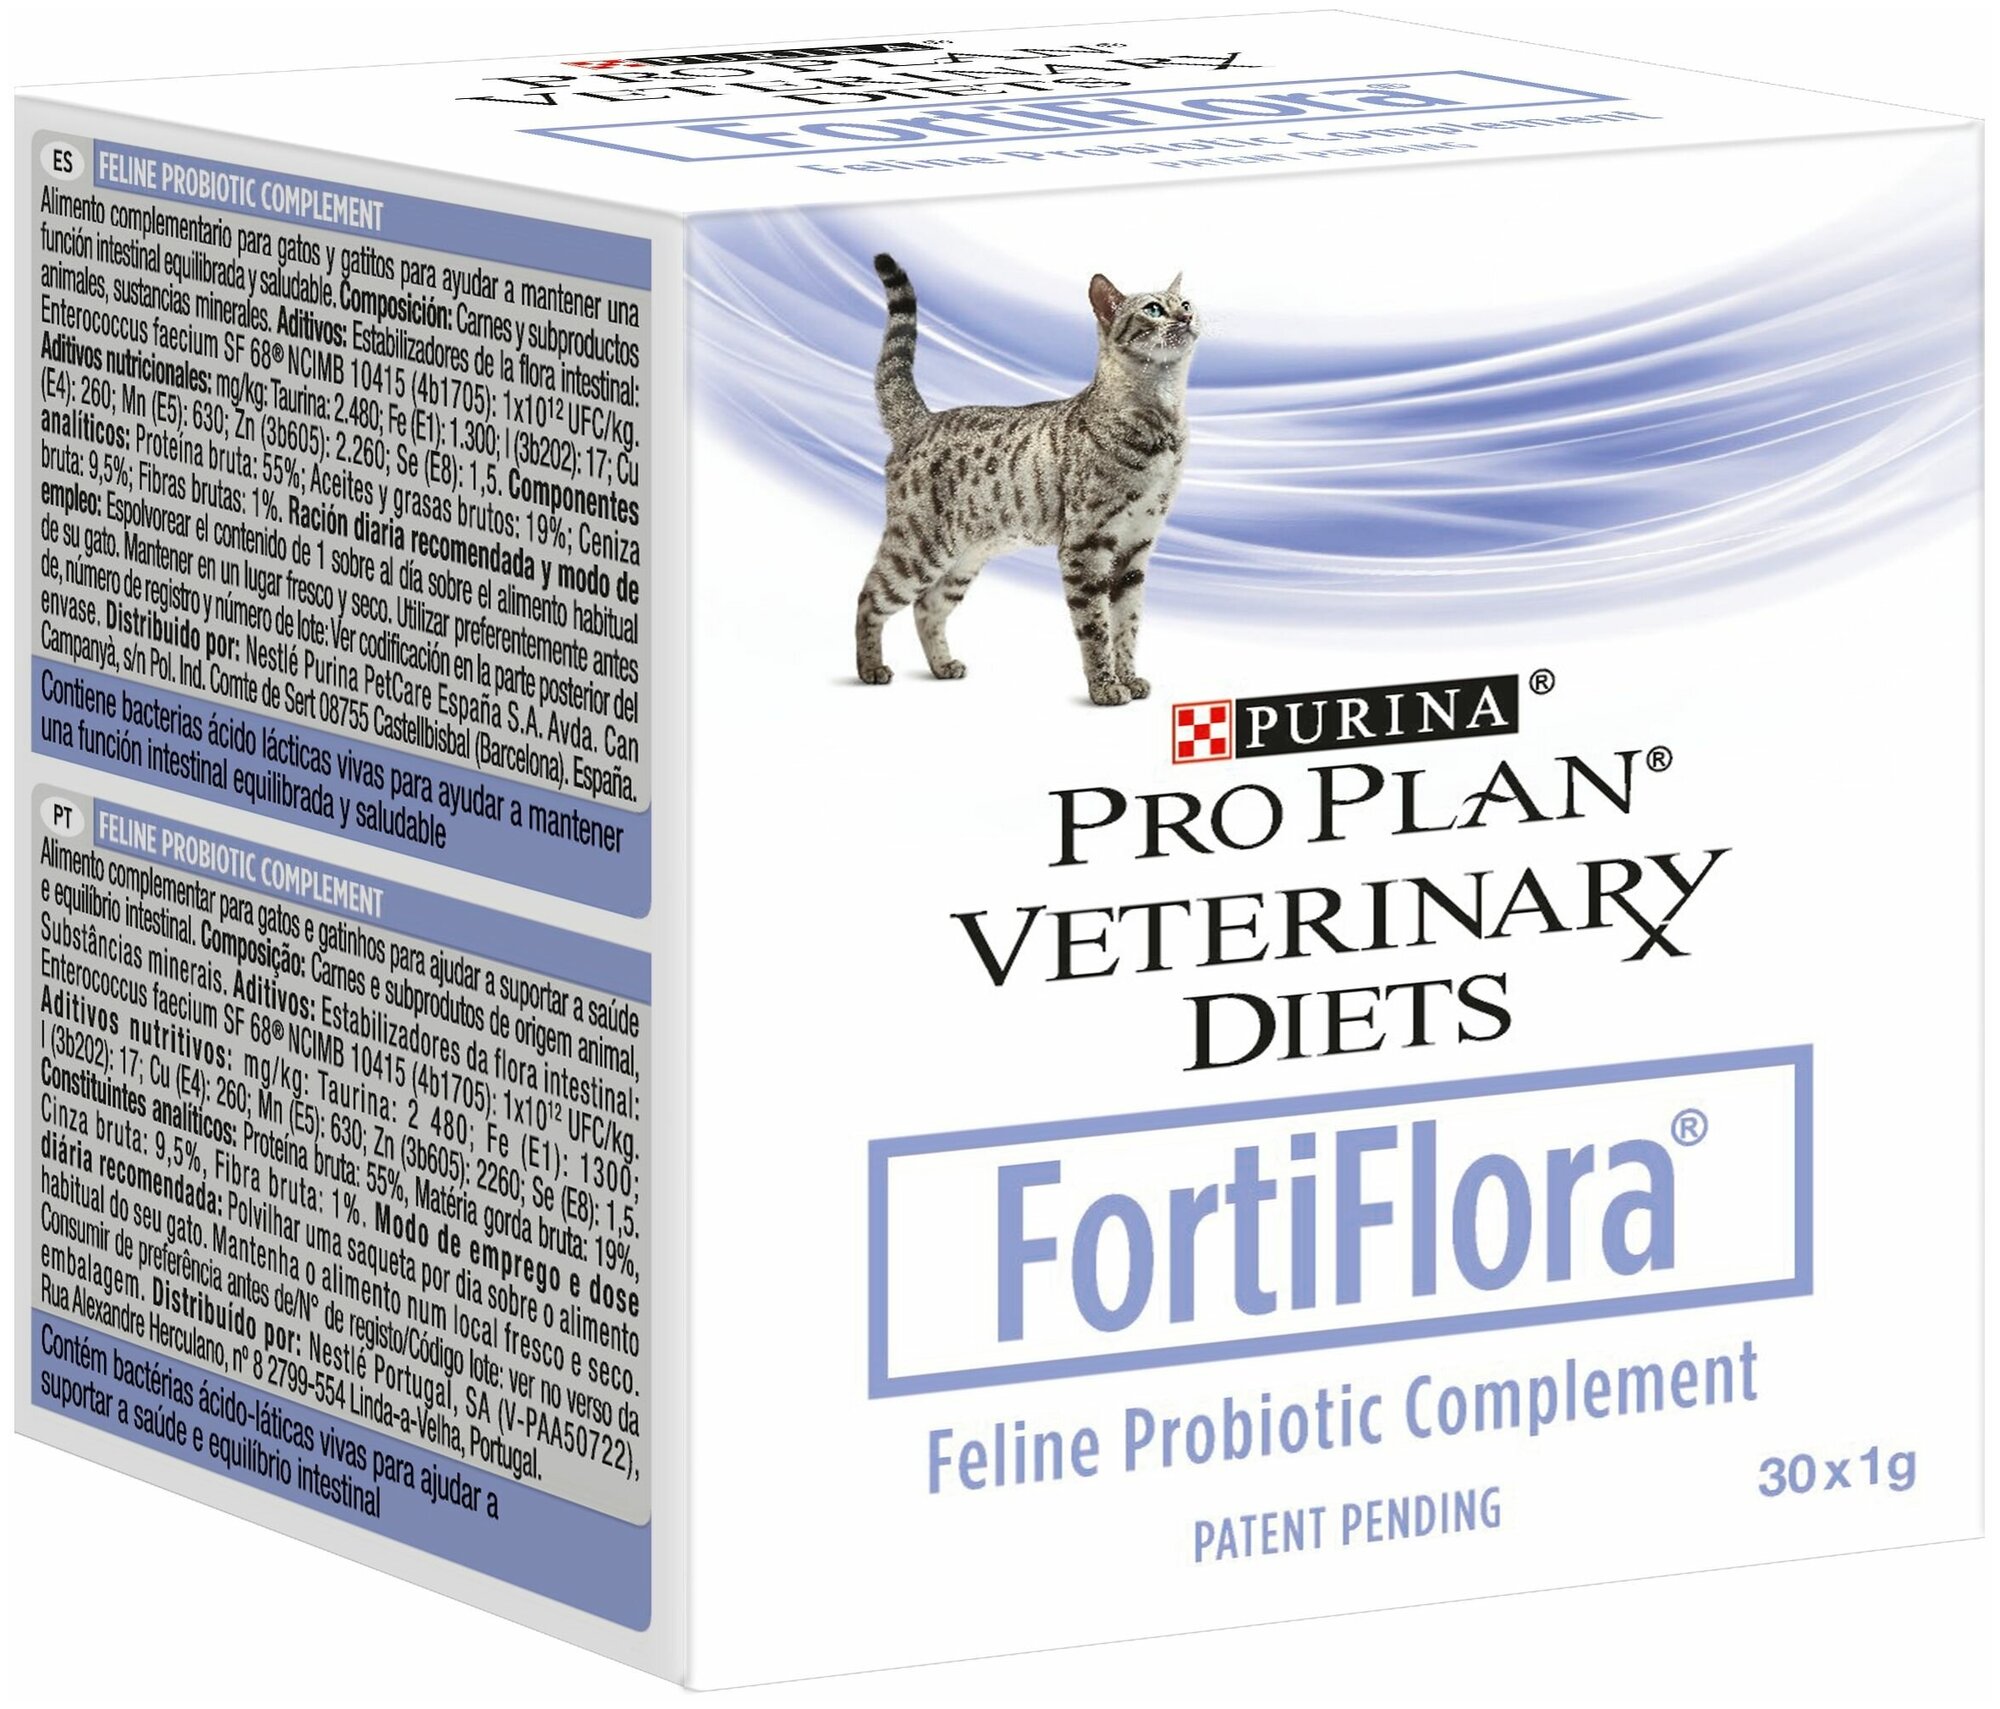 Пребиотическая добавка Purina Pro Plan Veterinary diets Forti Flora для кошек и котят, 1гр*30шт. Purina ProPlan - фото №1